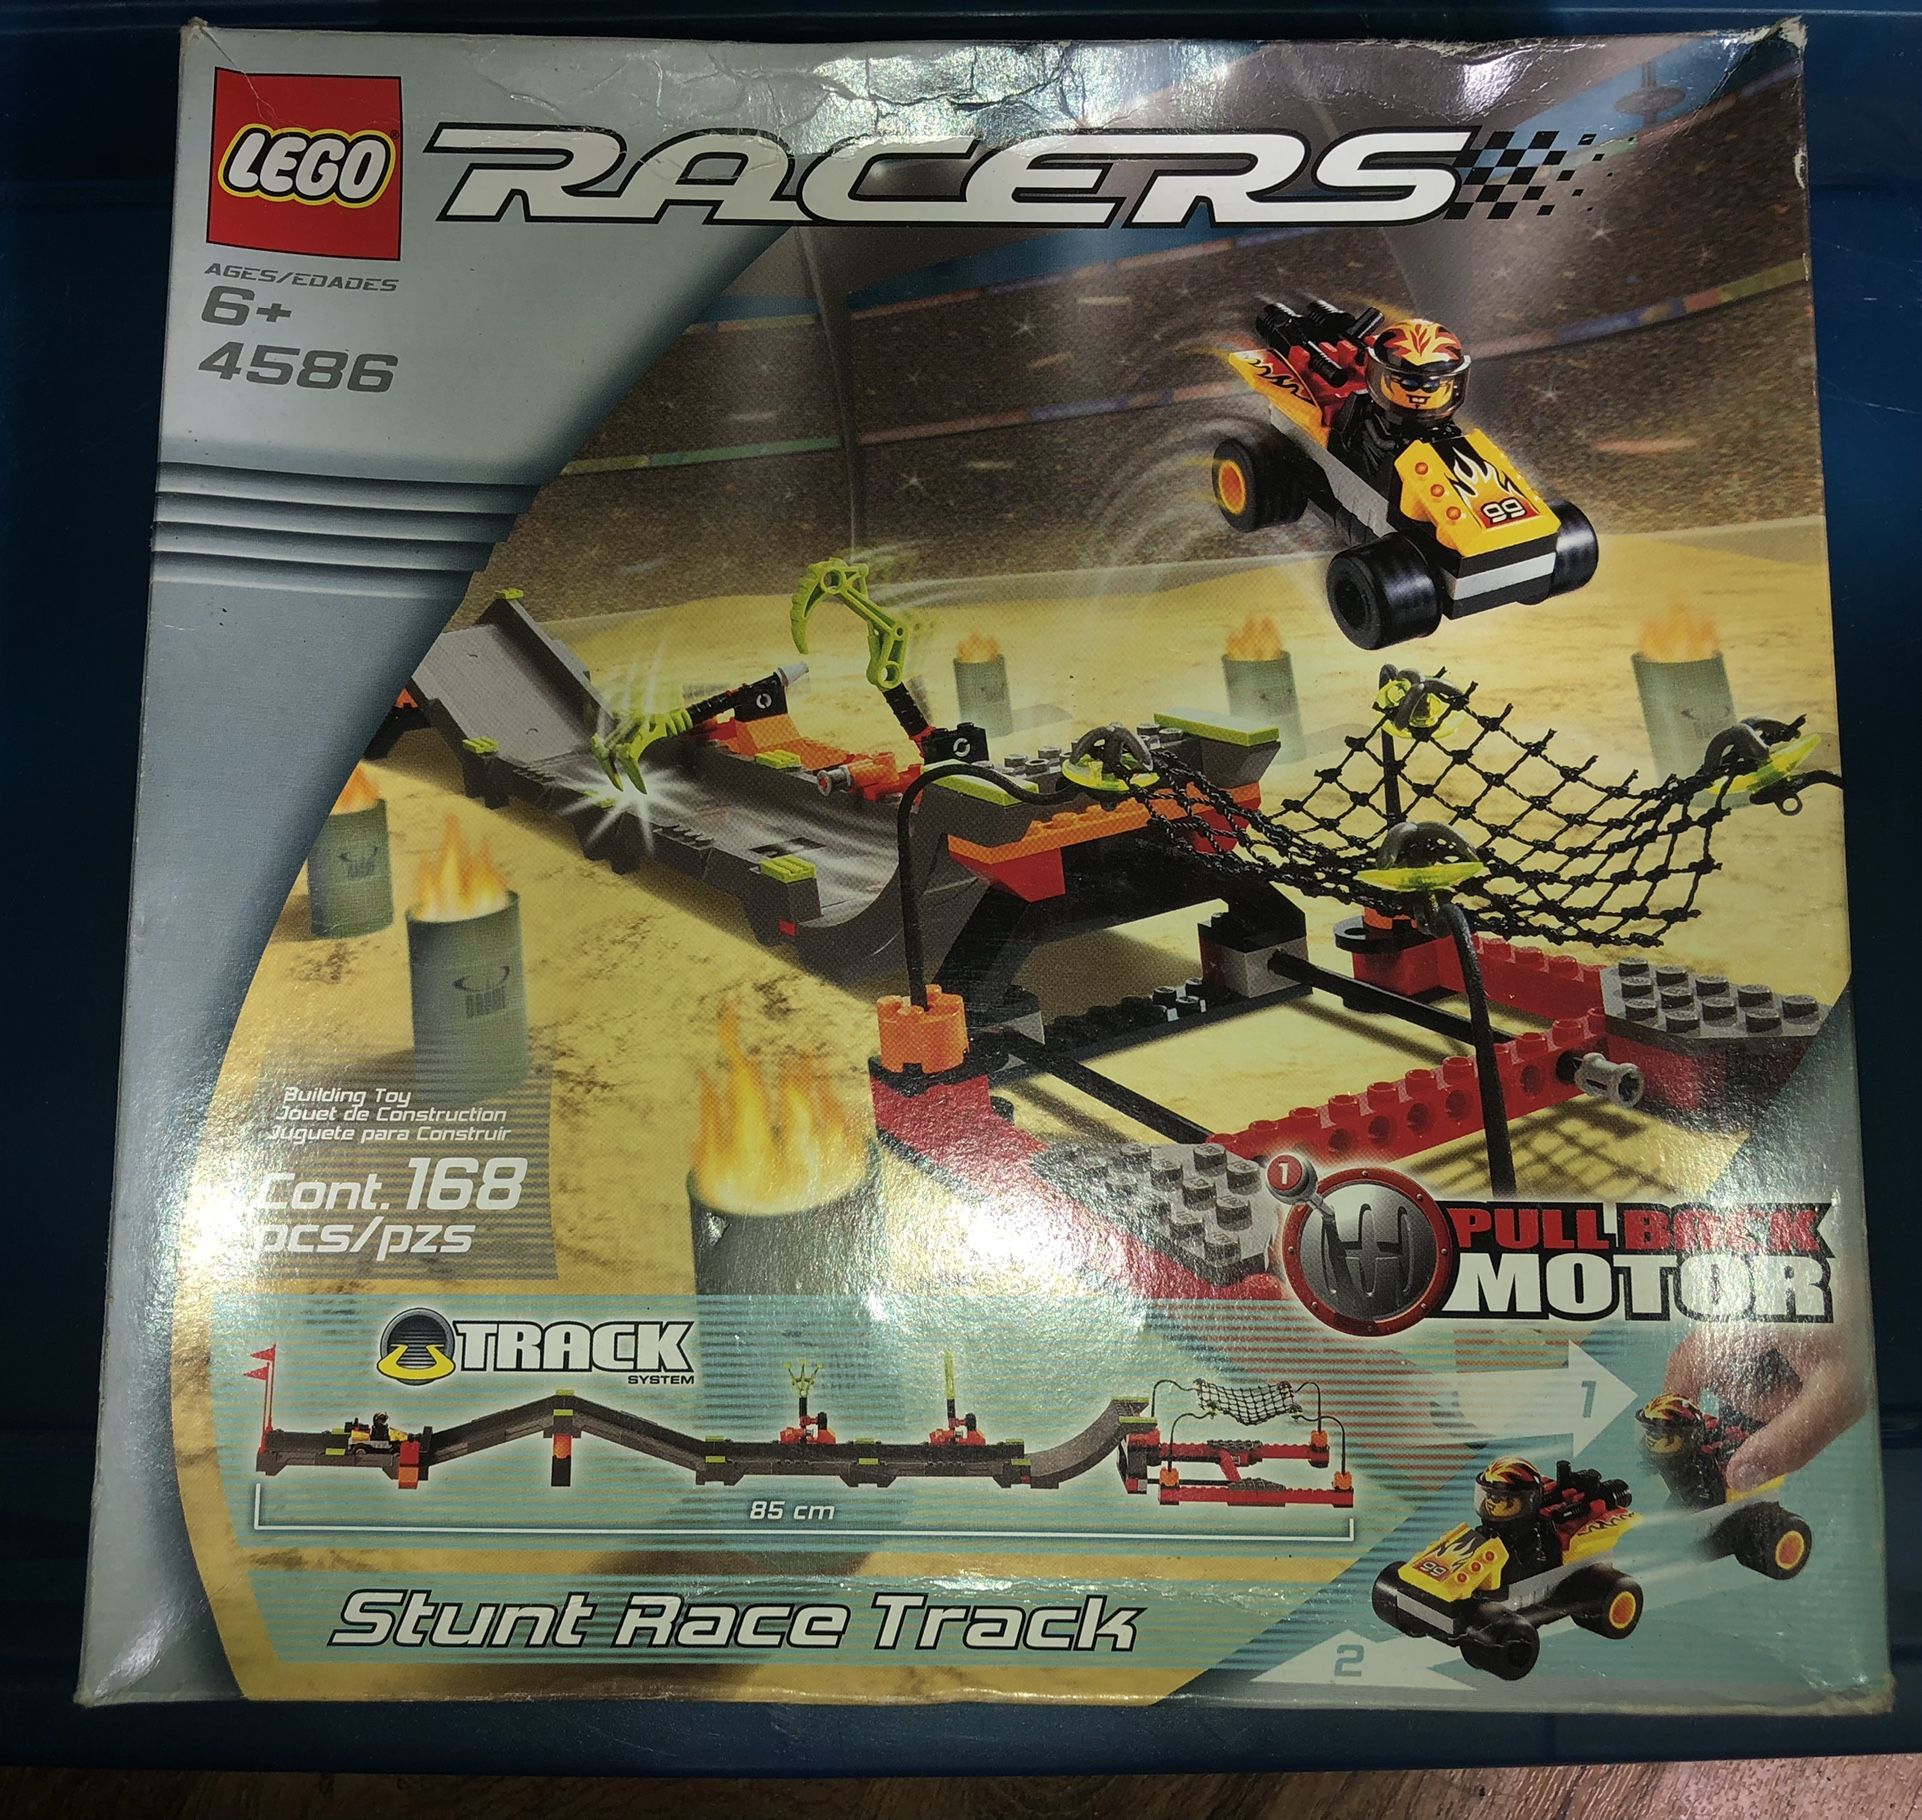 LEGO RACERS #4586 STUNT RACE TRACK